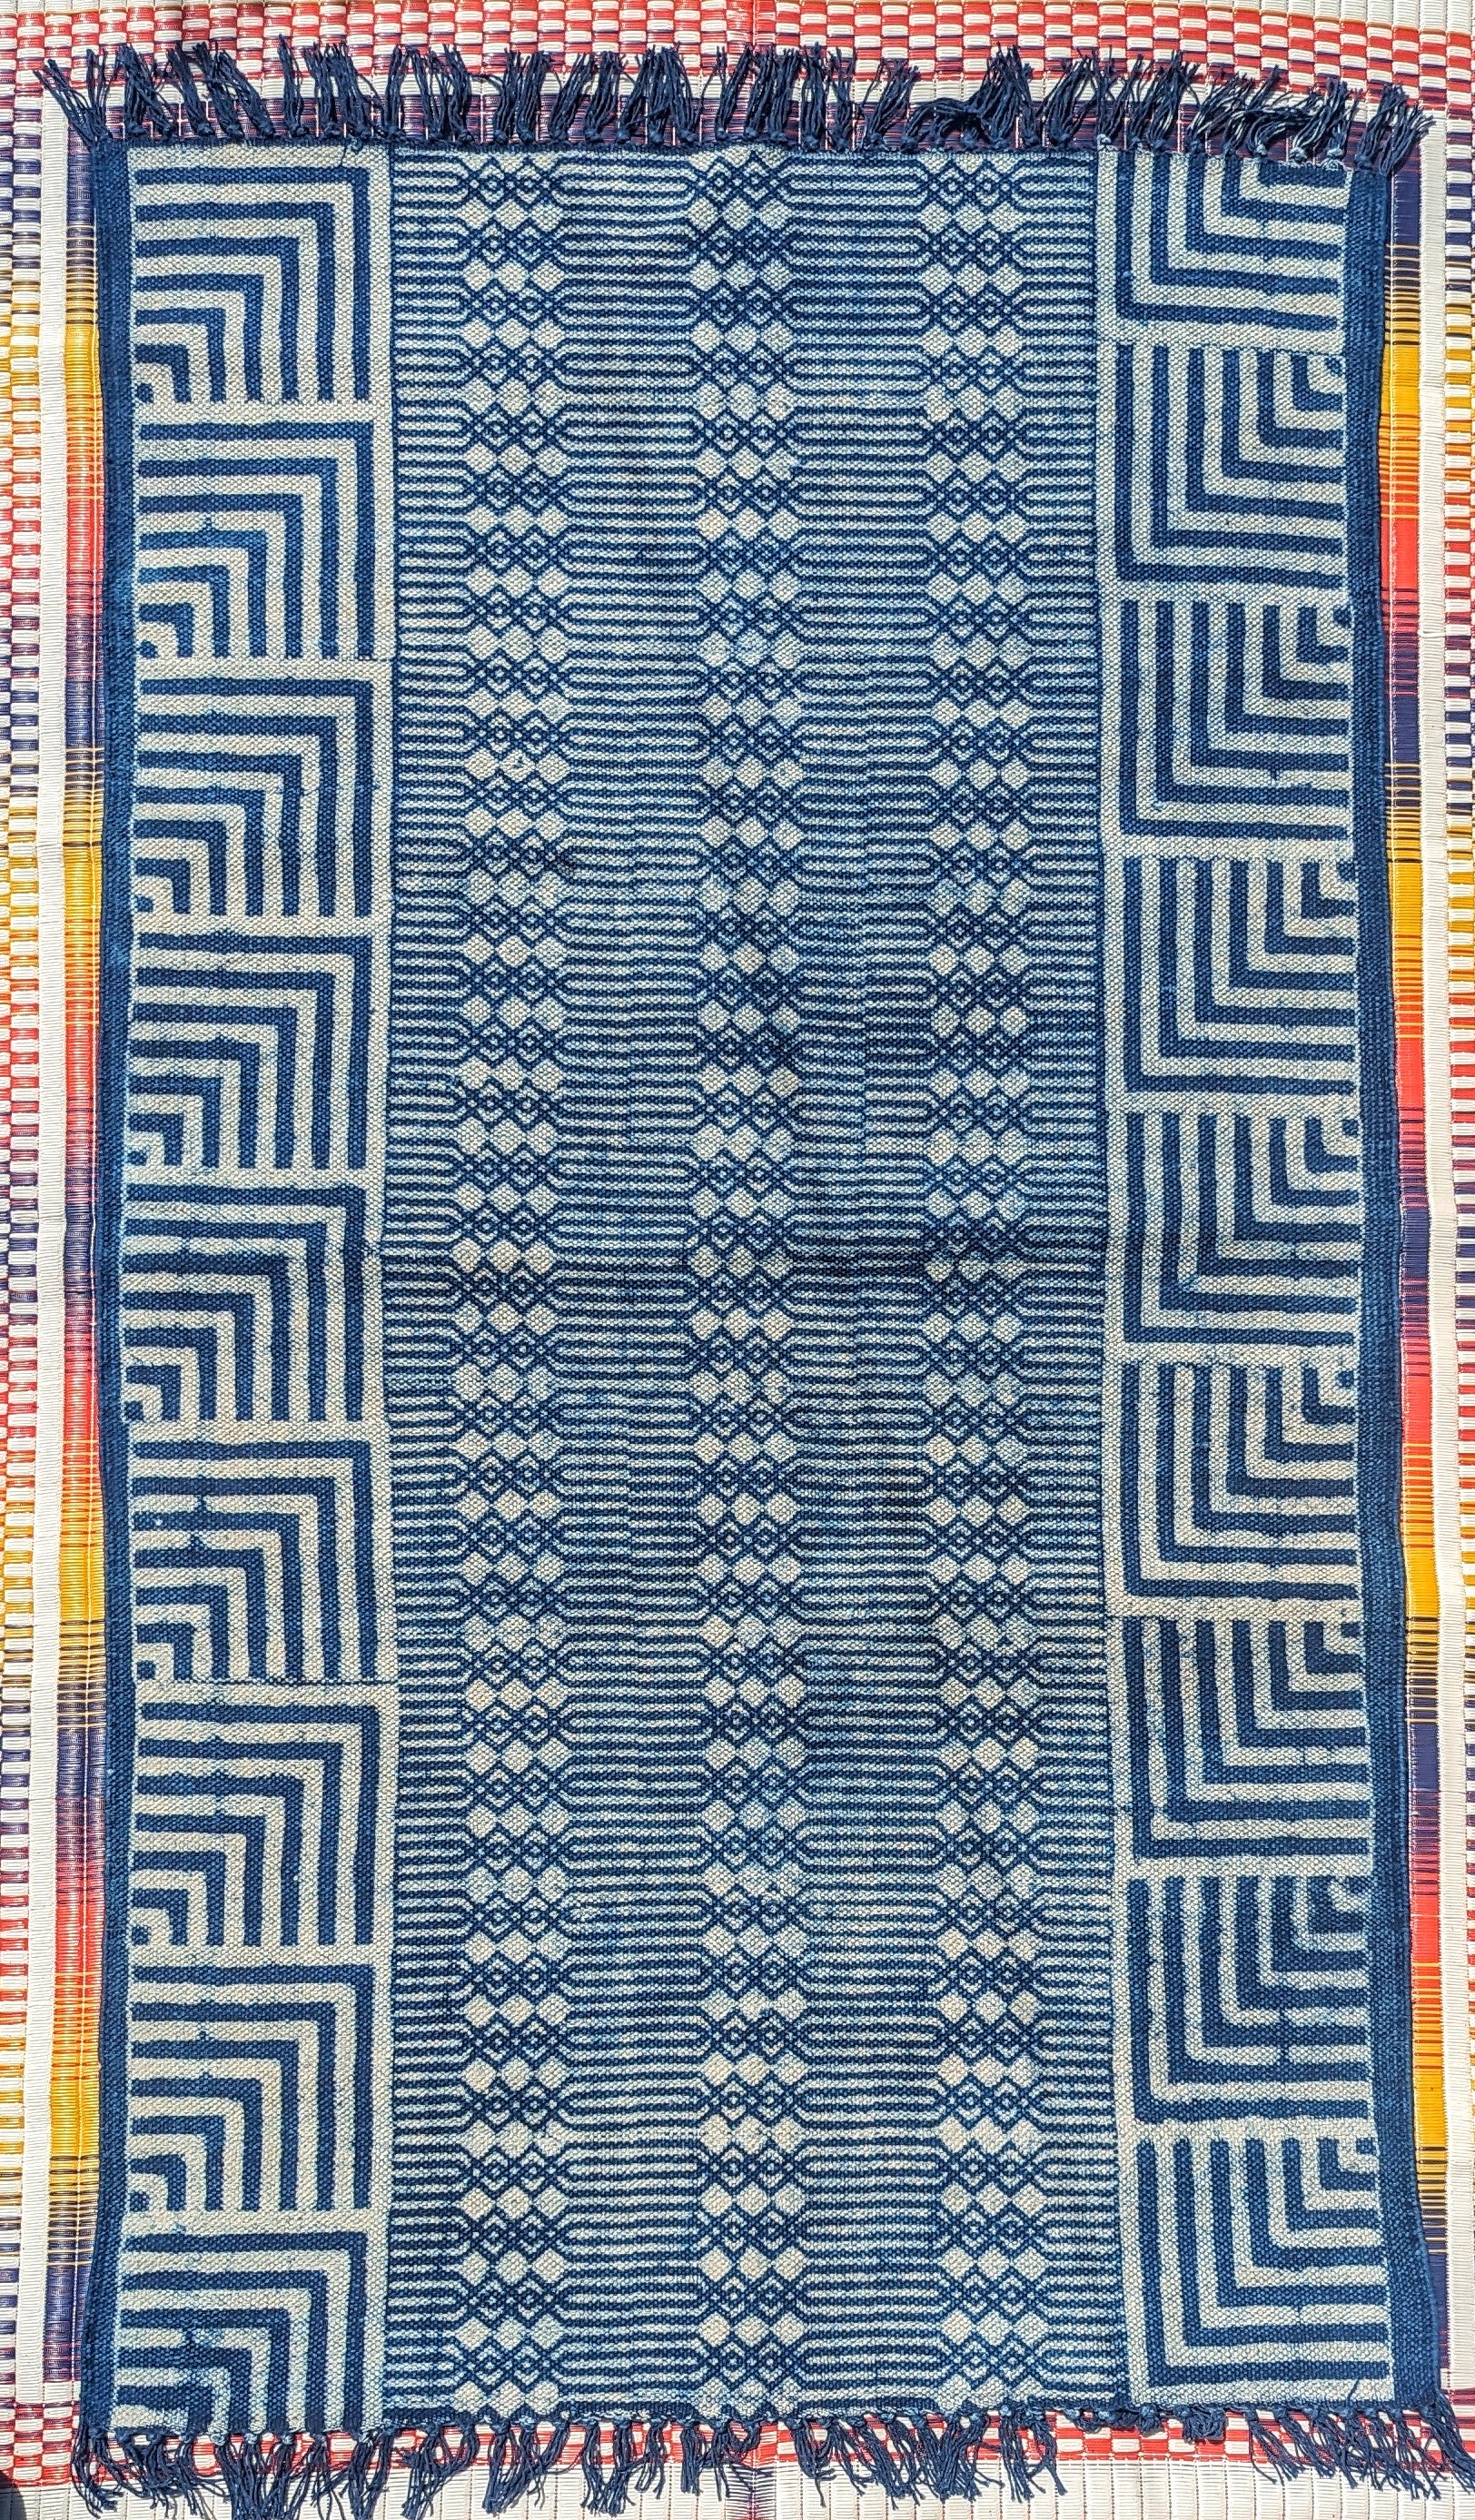 Large Indigo cotton flatweave rugs